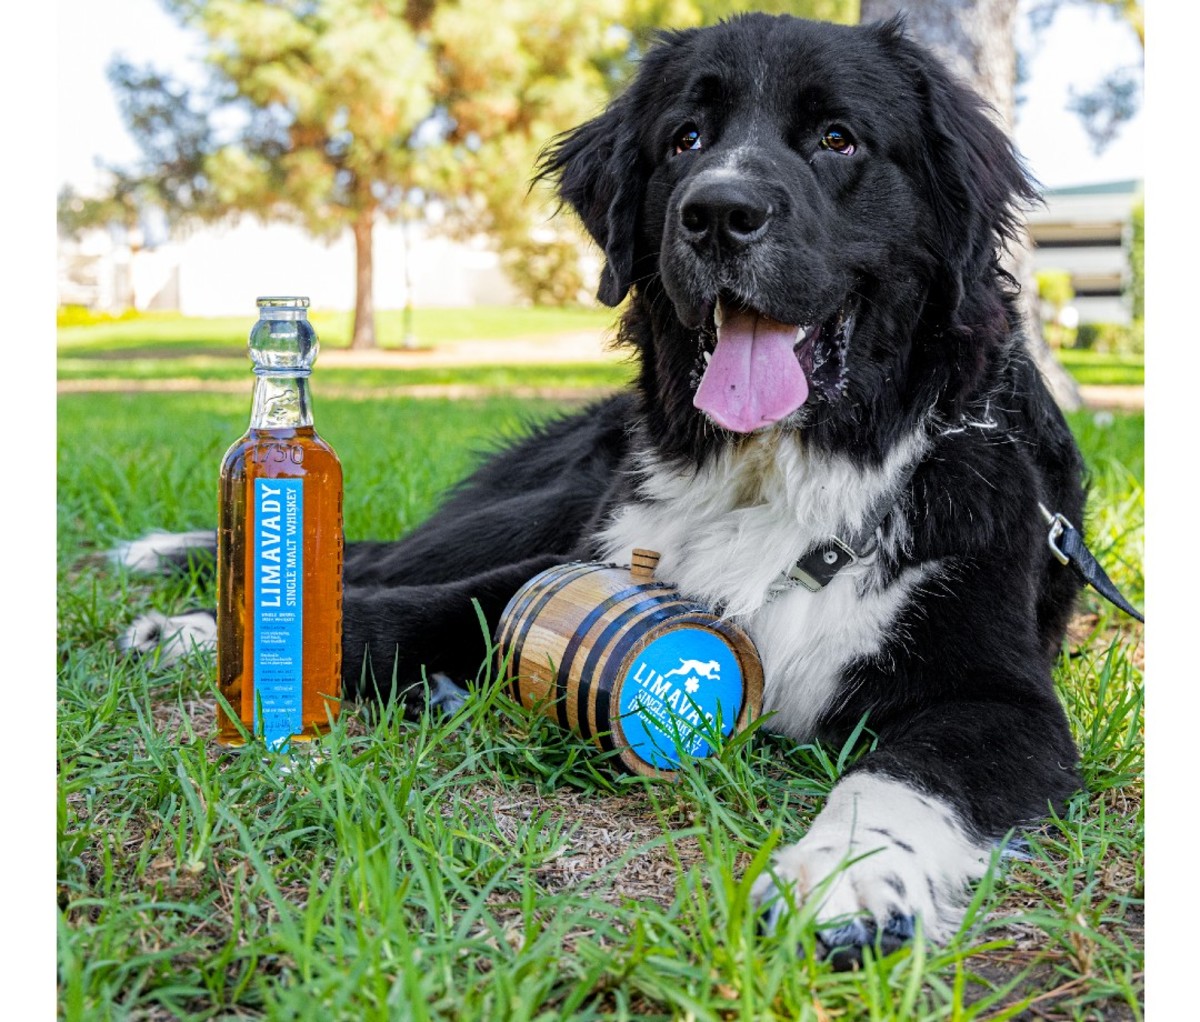 Large black and white dog wearing whiskey barrel collar next to bottle of Limavady